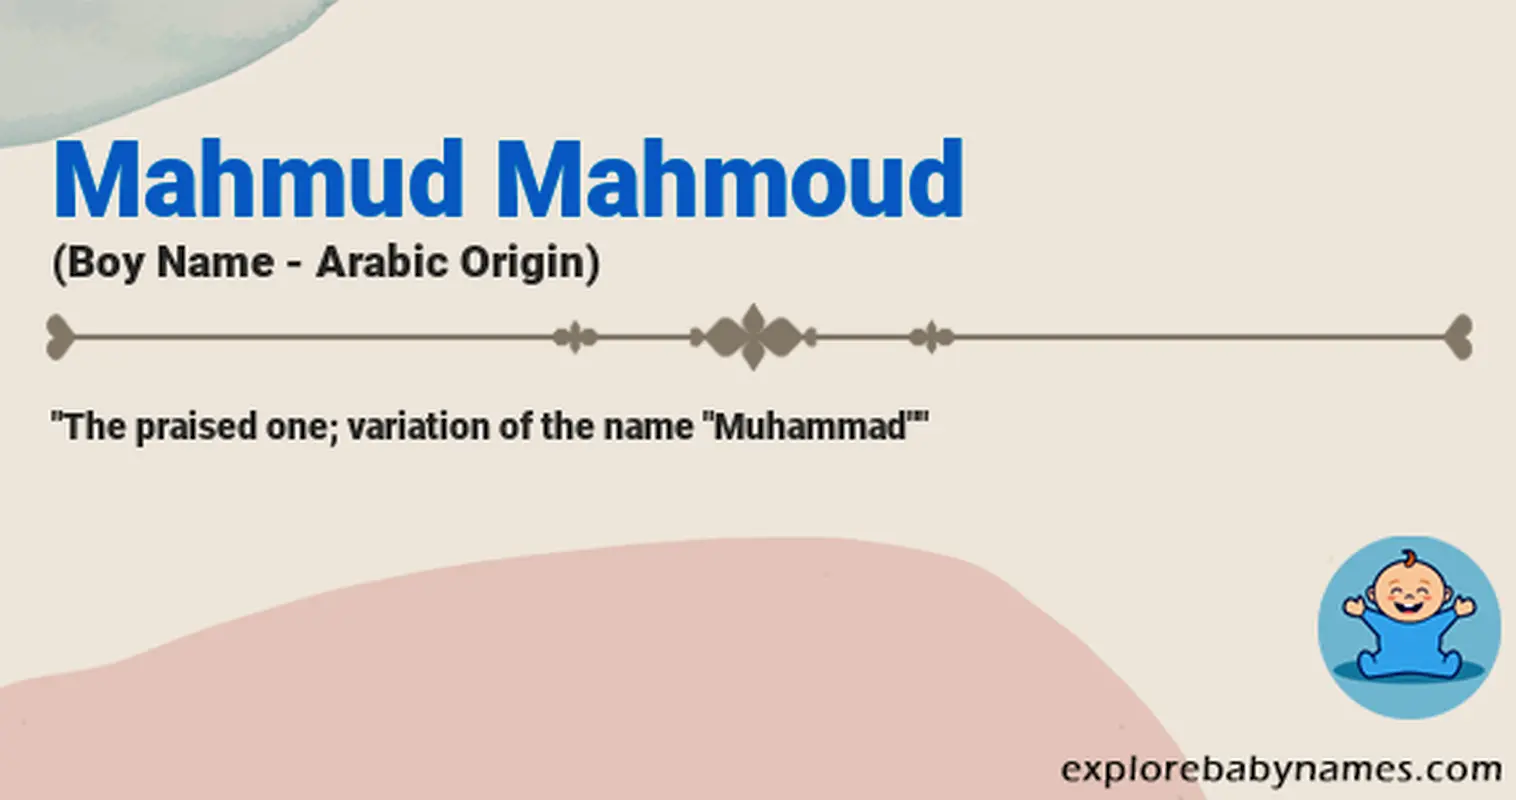 Meaning of Mahmud Mahmoud